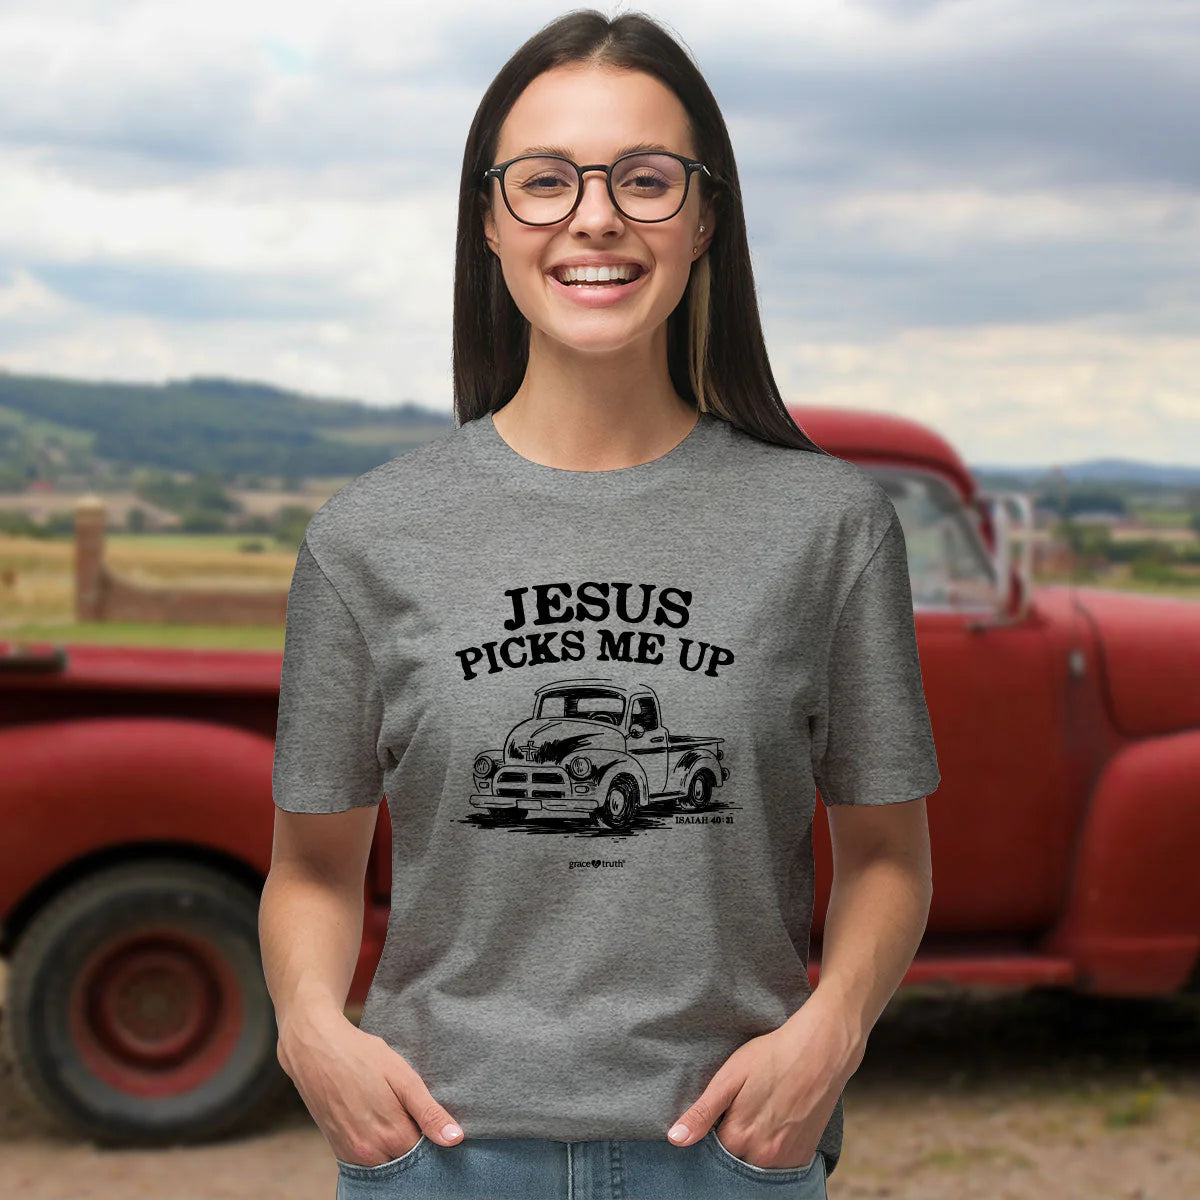 grace & truth Womens T-Shirt Jesus Picks Me Up grace & truth® Apparel Short Sleeve T-shirts Women's